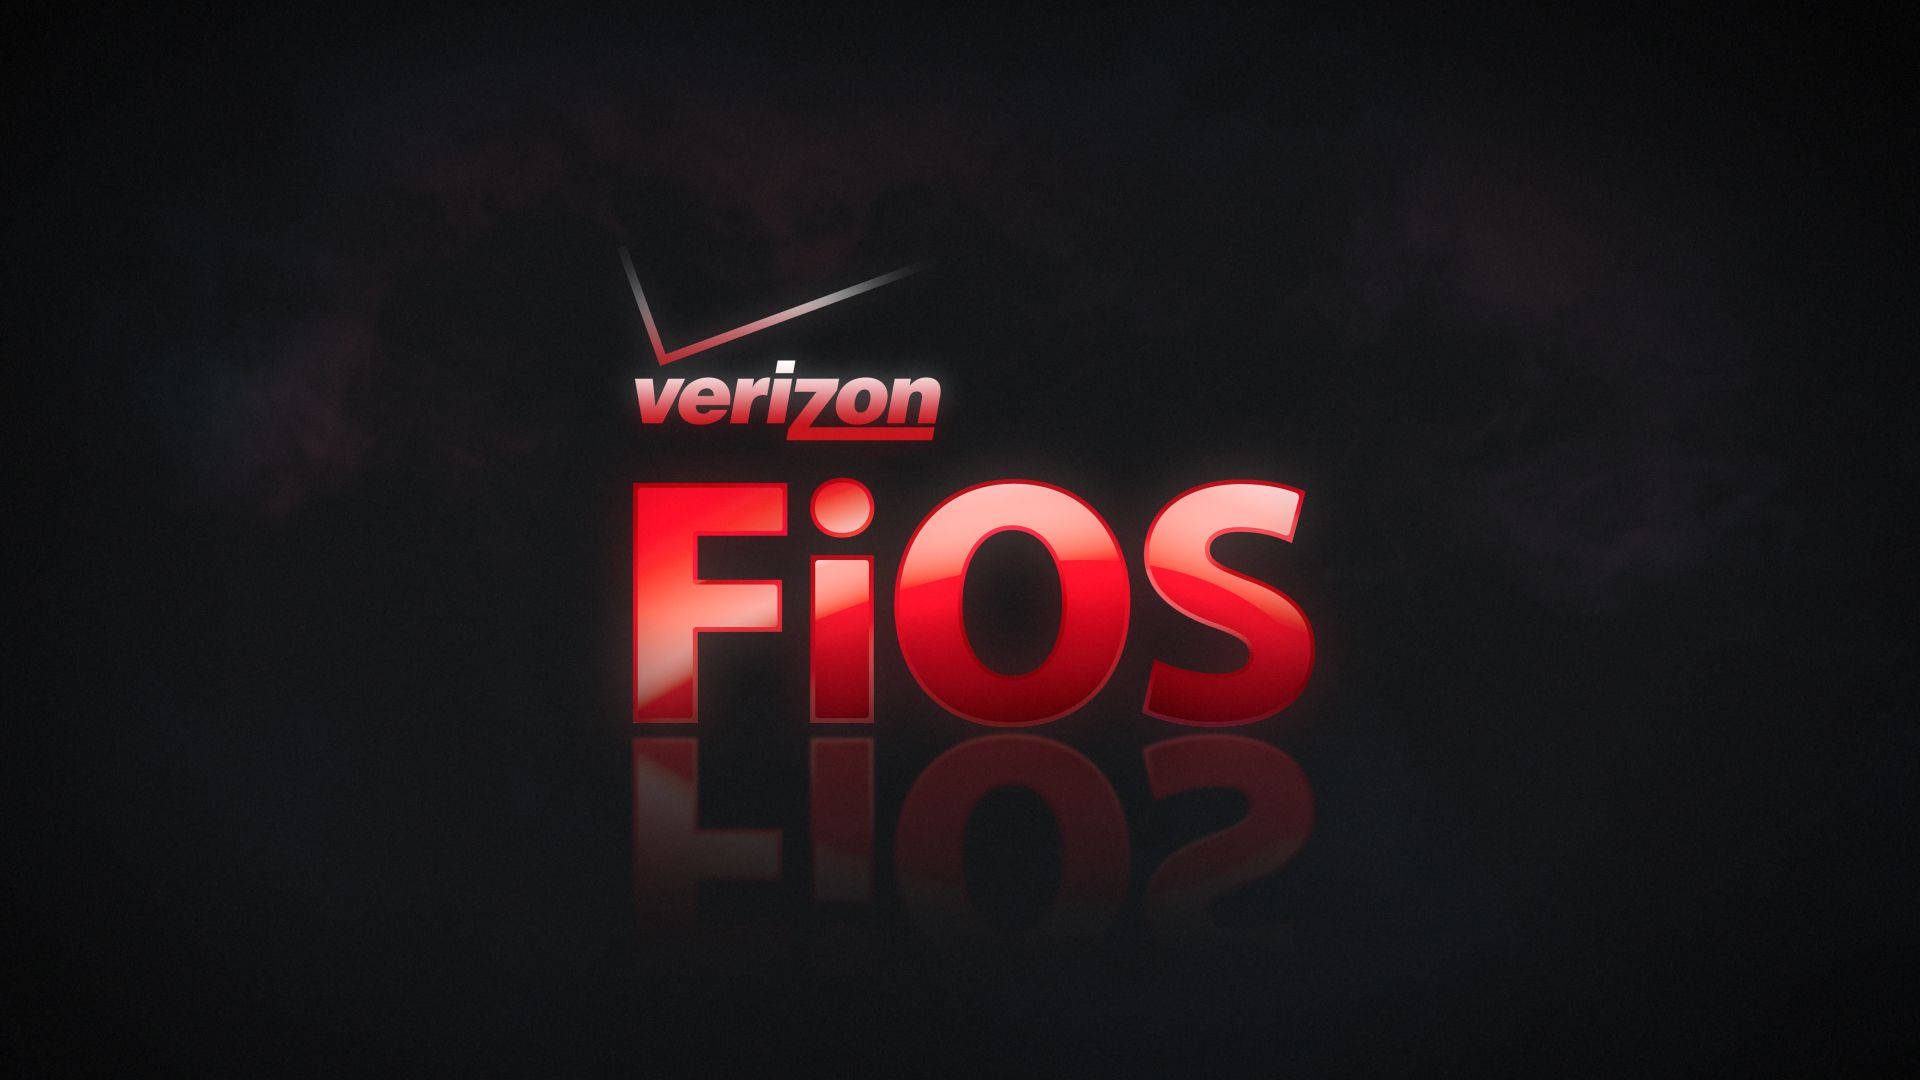 Verizon Fios Red Logo Background